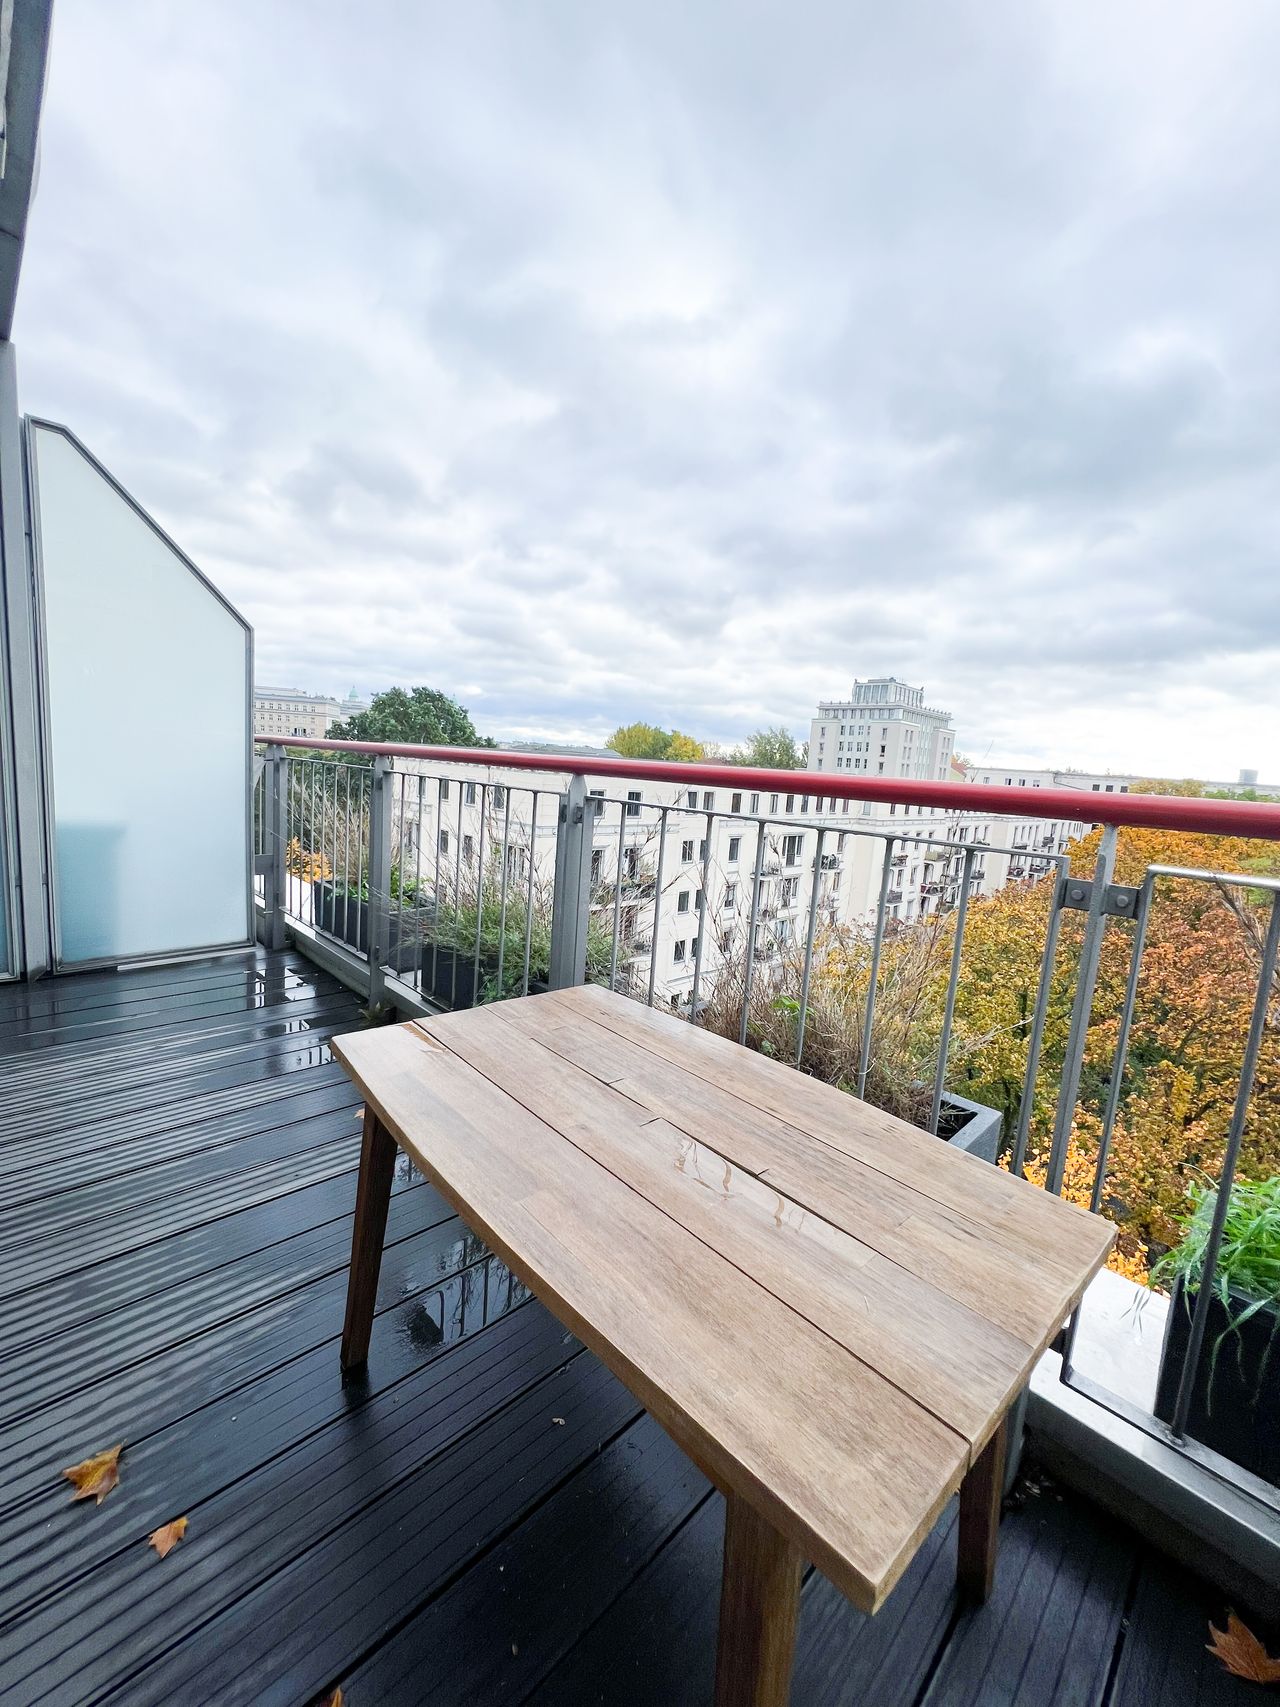 Design-maisonette-studio with two sunny terraces